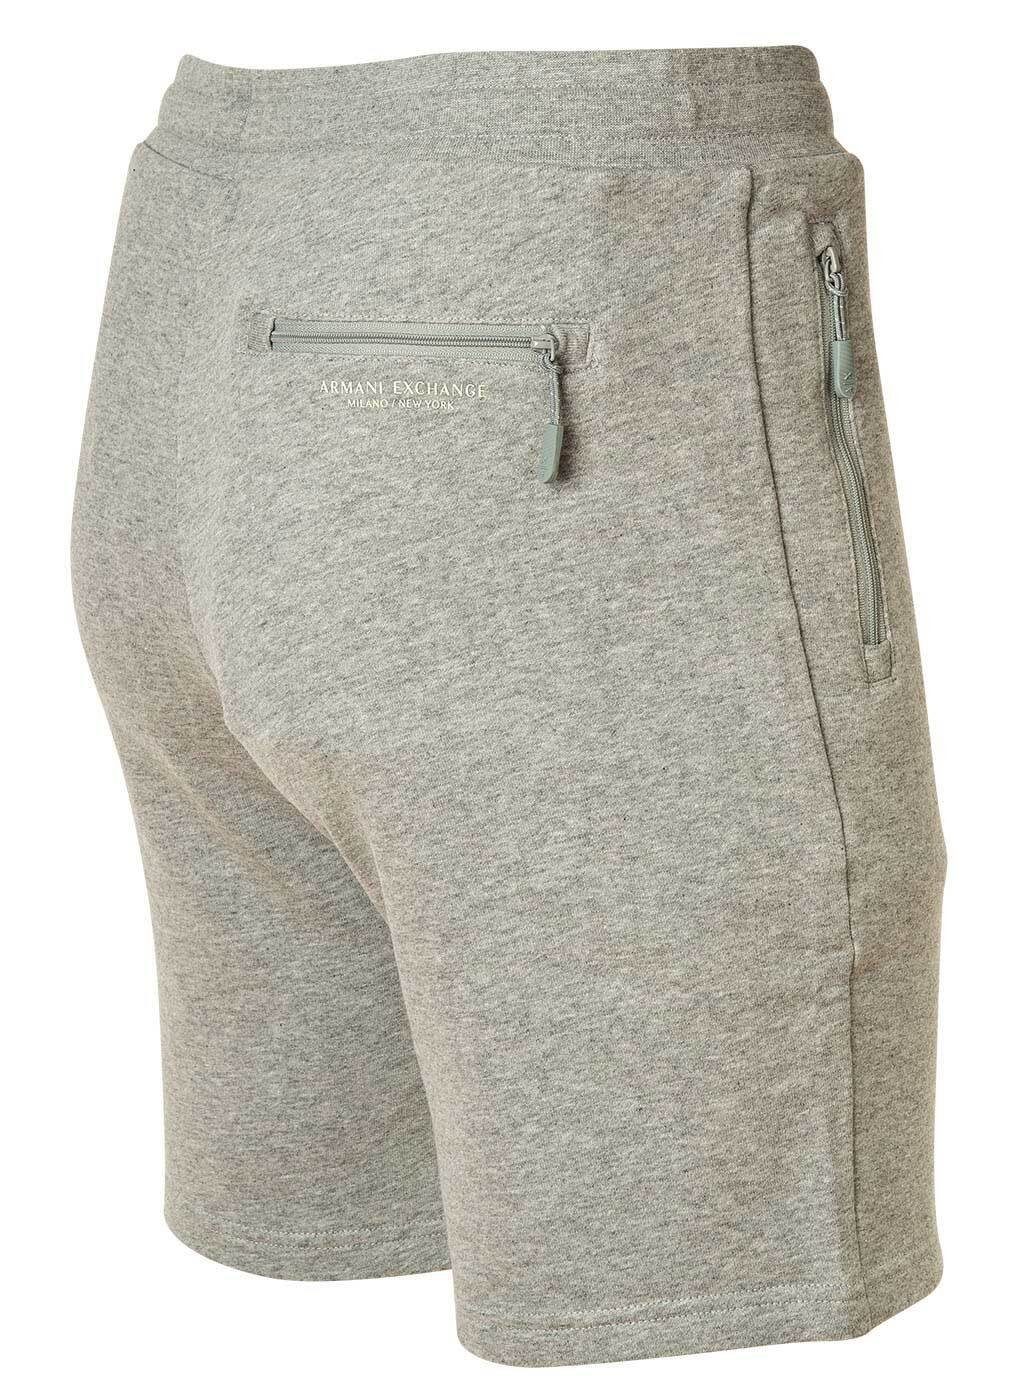 ARMANI EXCHANGE Sweatshorts Herren Loungewear Jogginghose Grau kurz Pants, 